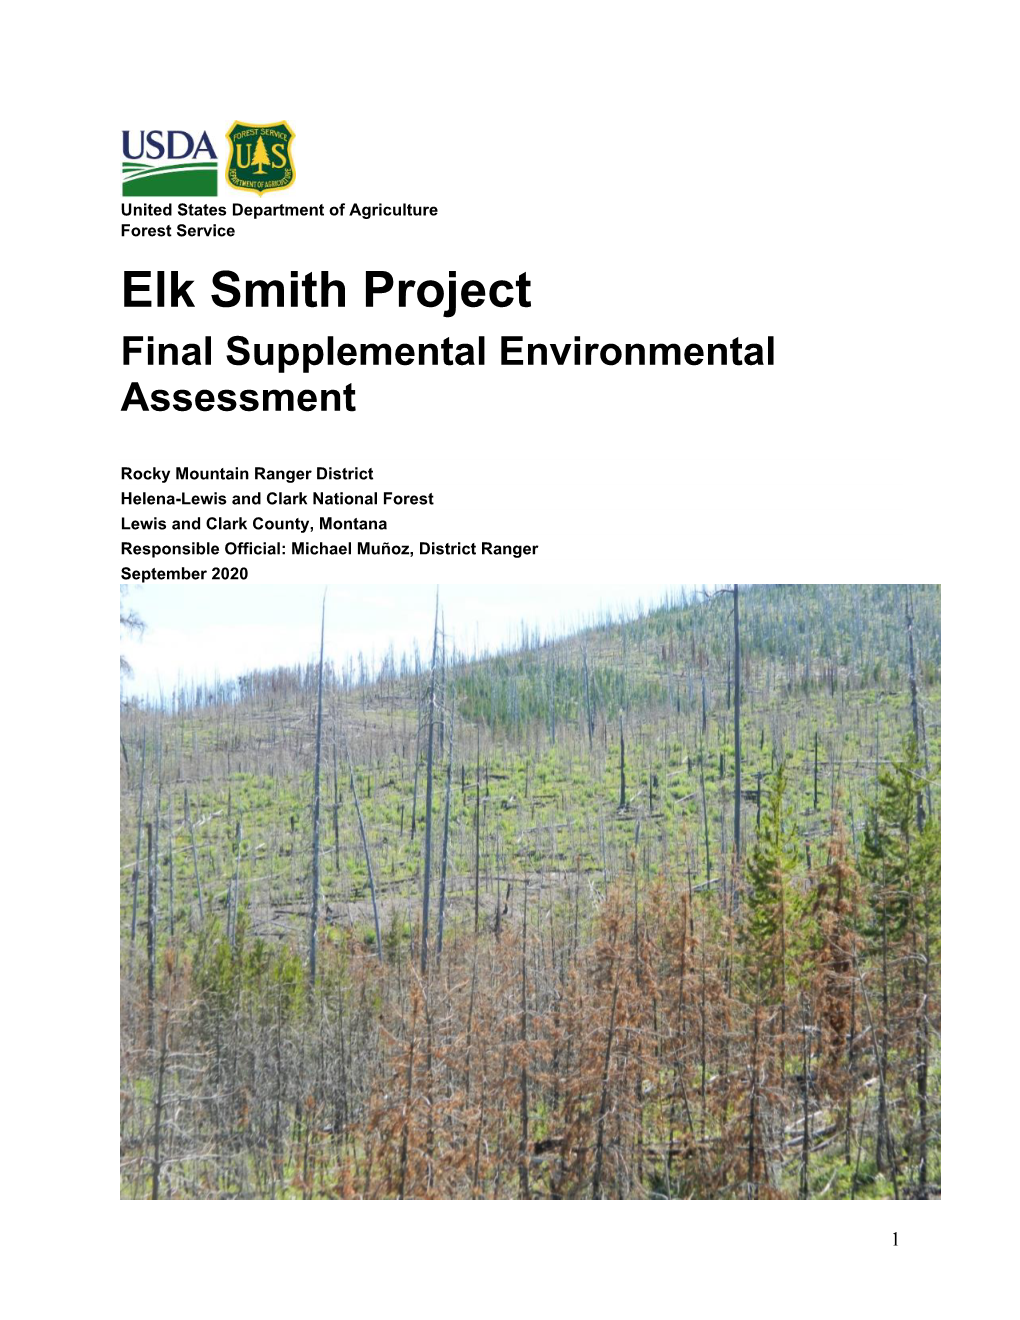 Elk Smith Project Final Supplemental Environmental Assessment